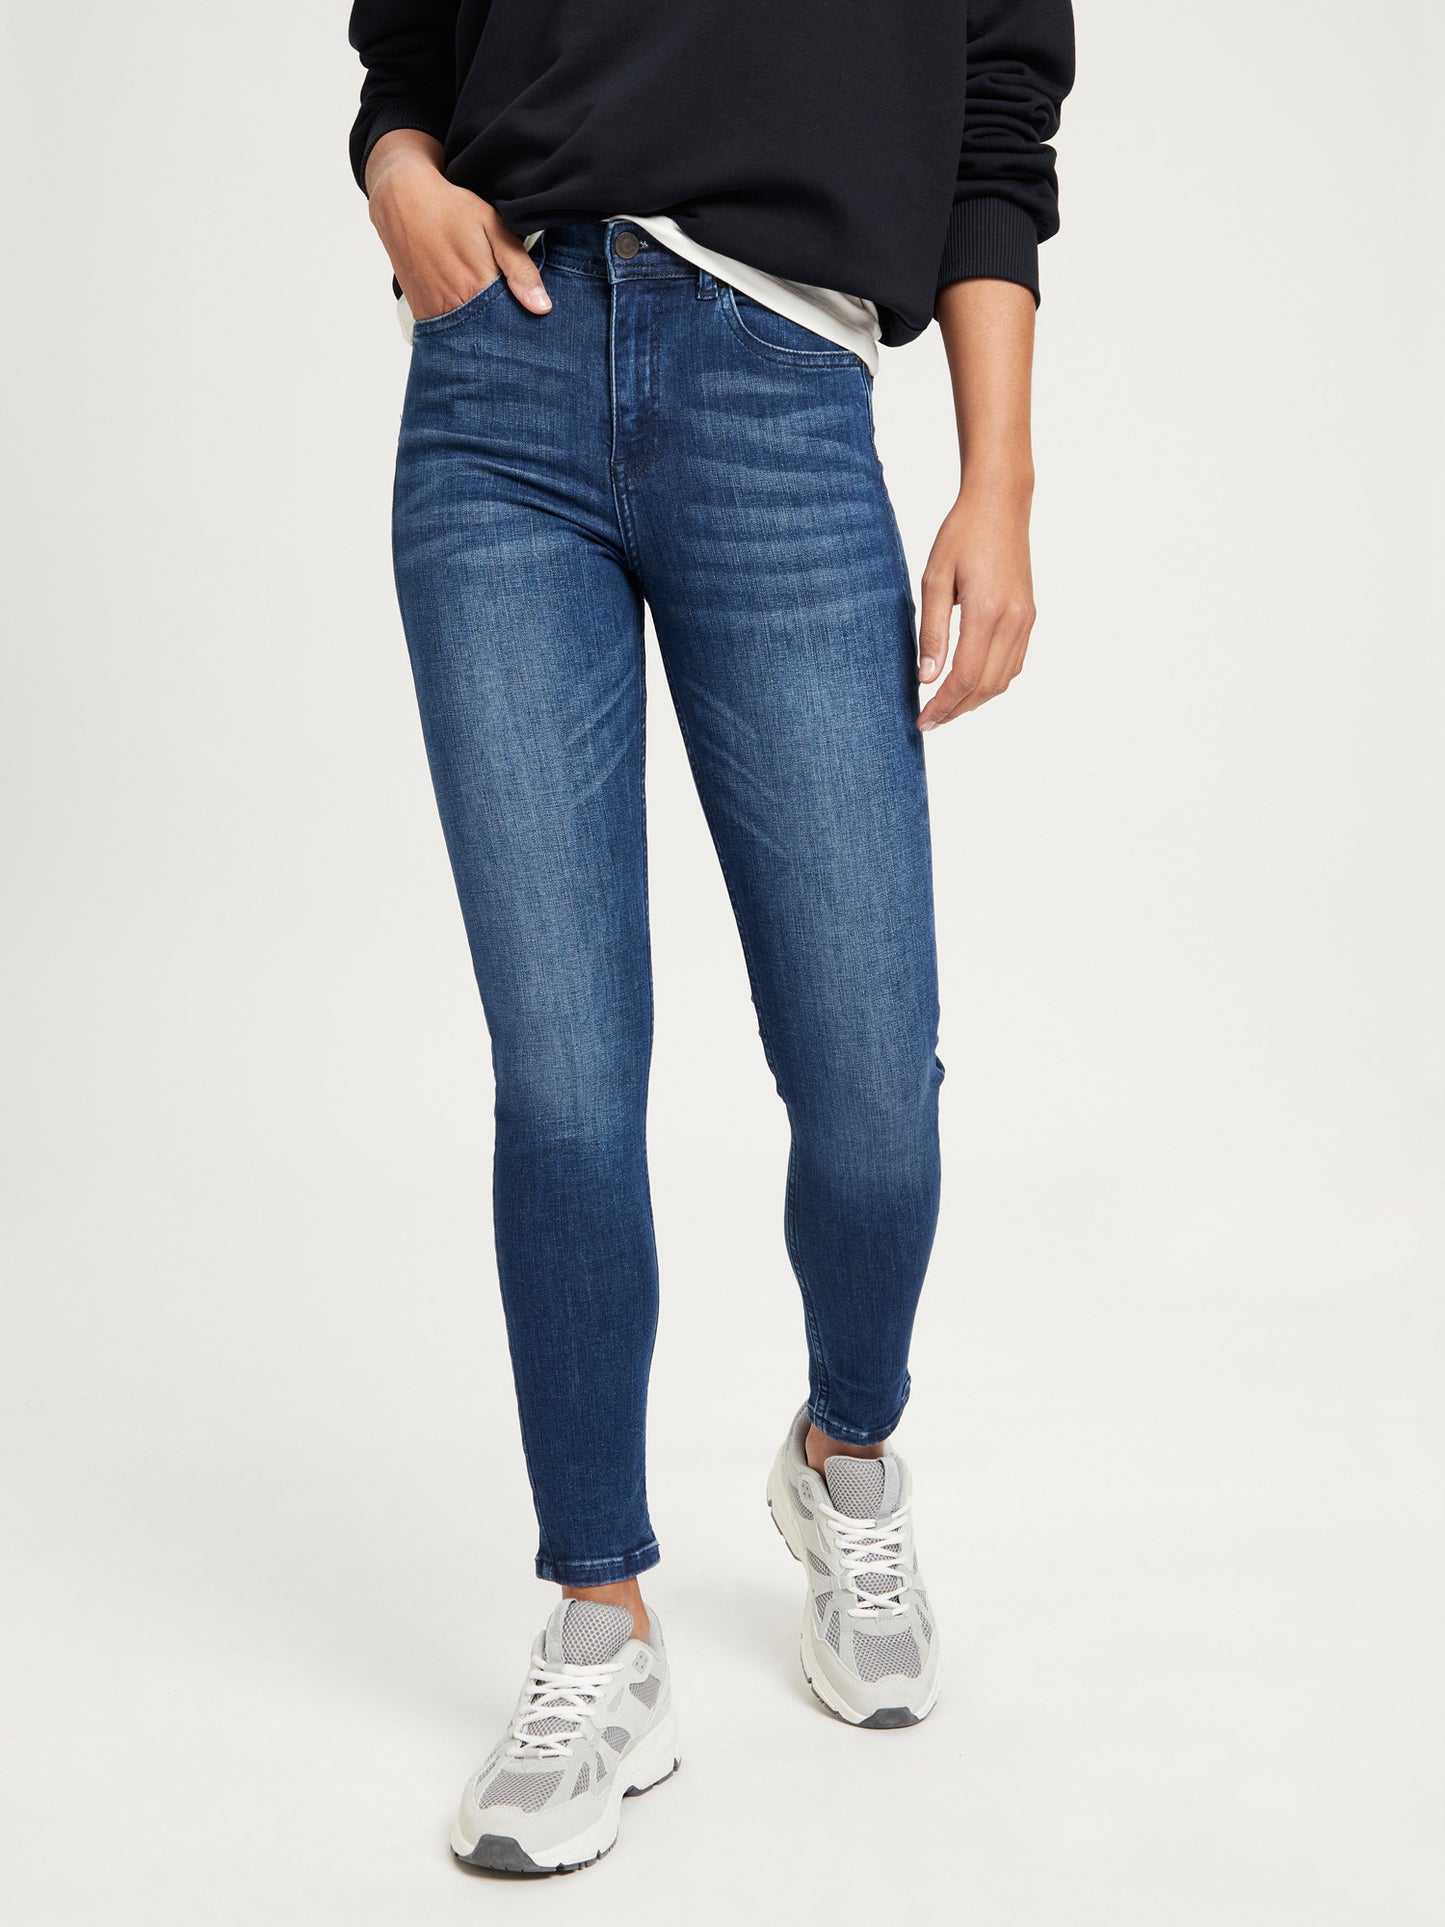 Judy Damen Jeans Super Skinny Fit High Waist Ankle Lenght mittelblau